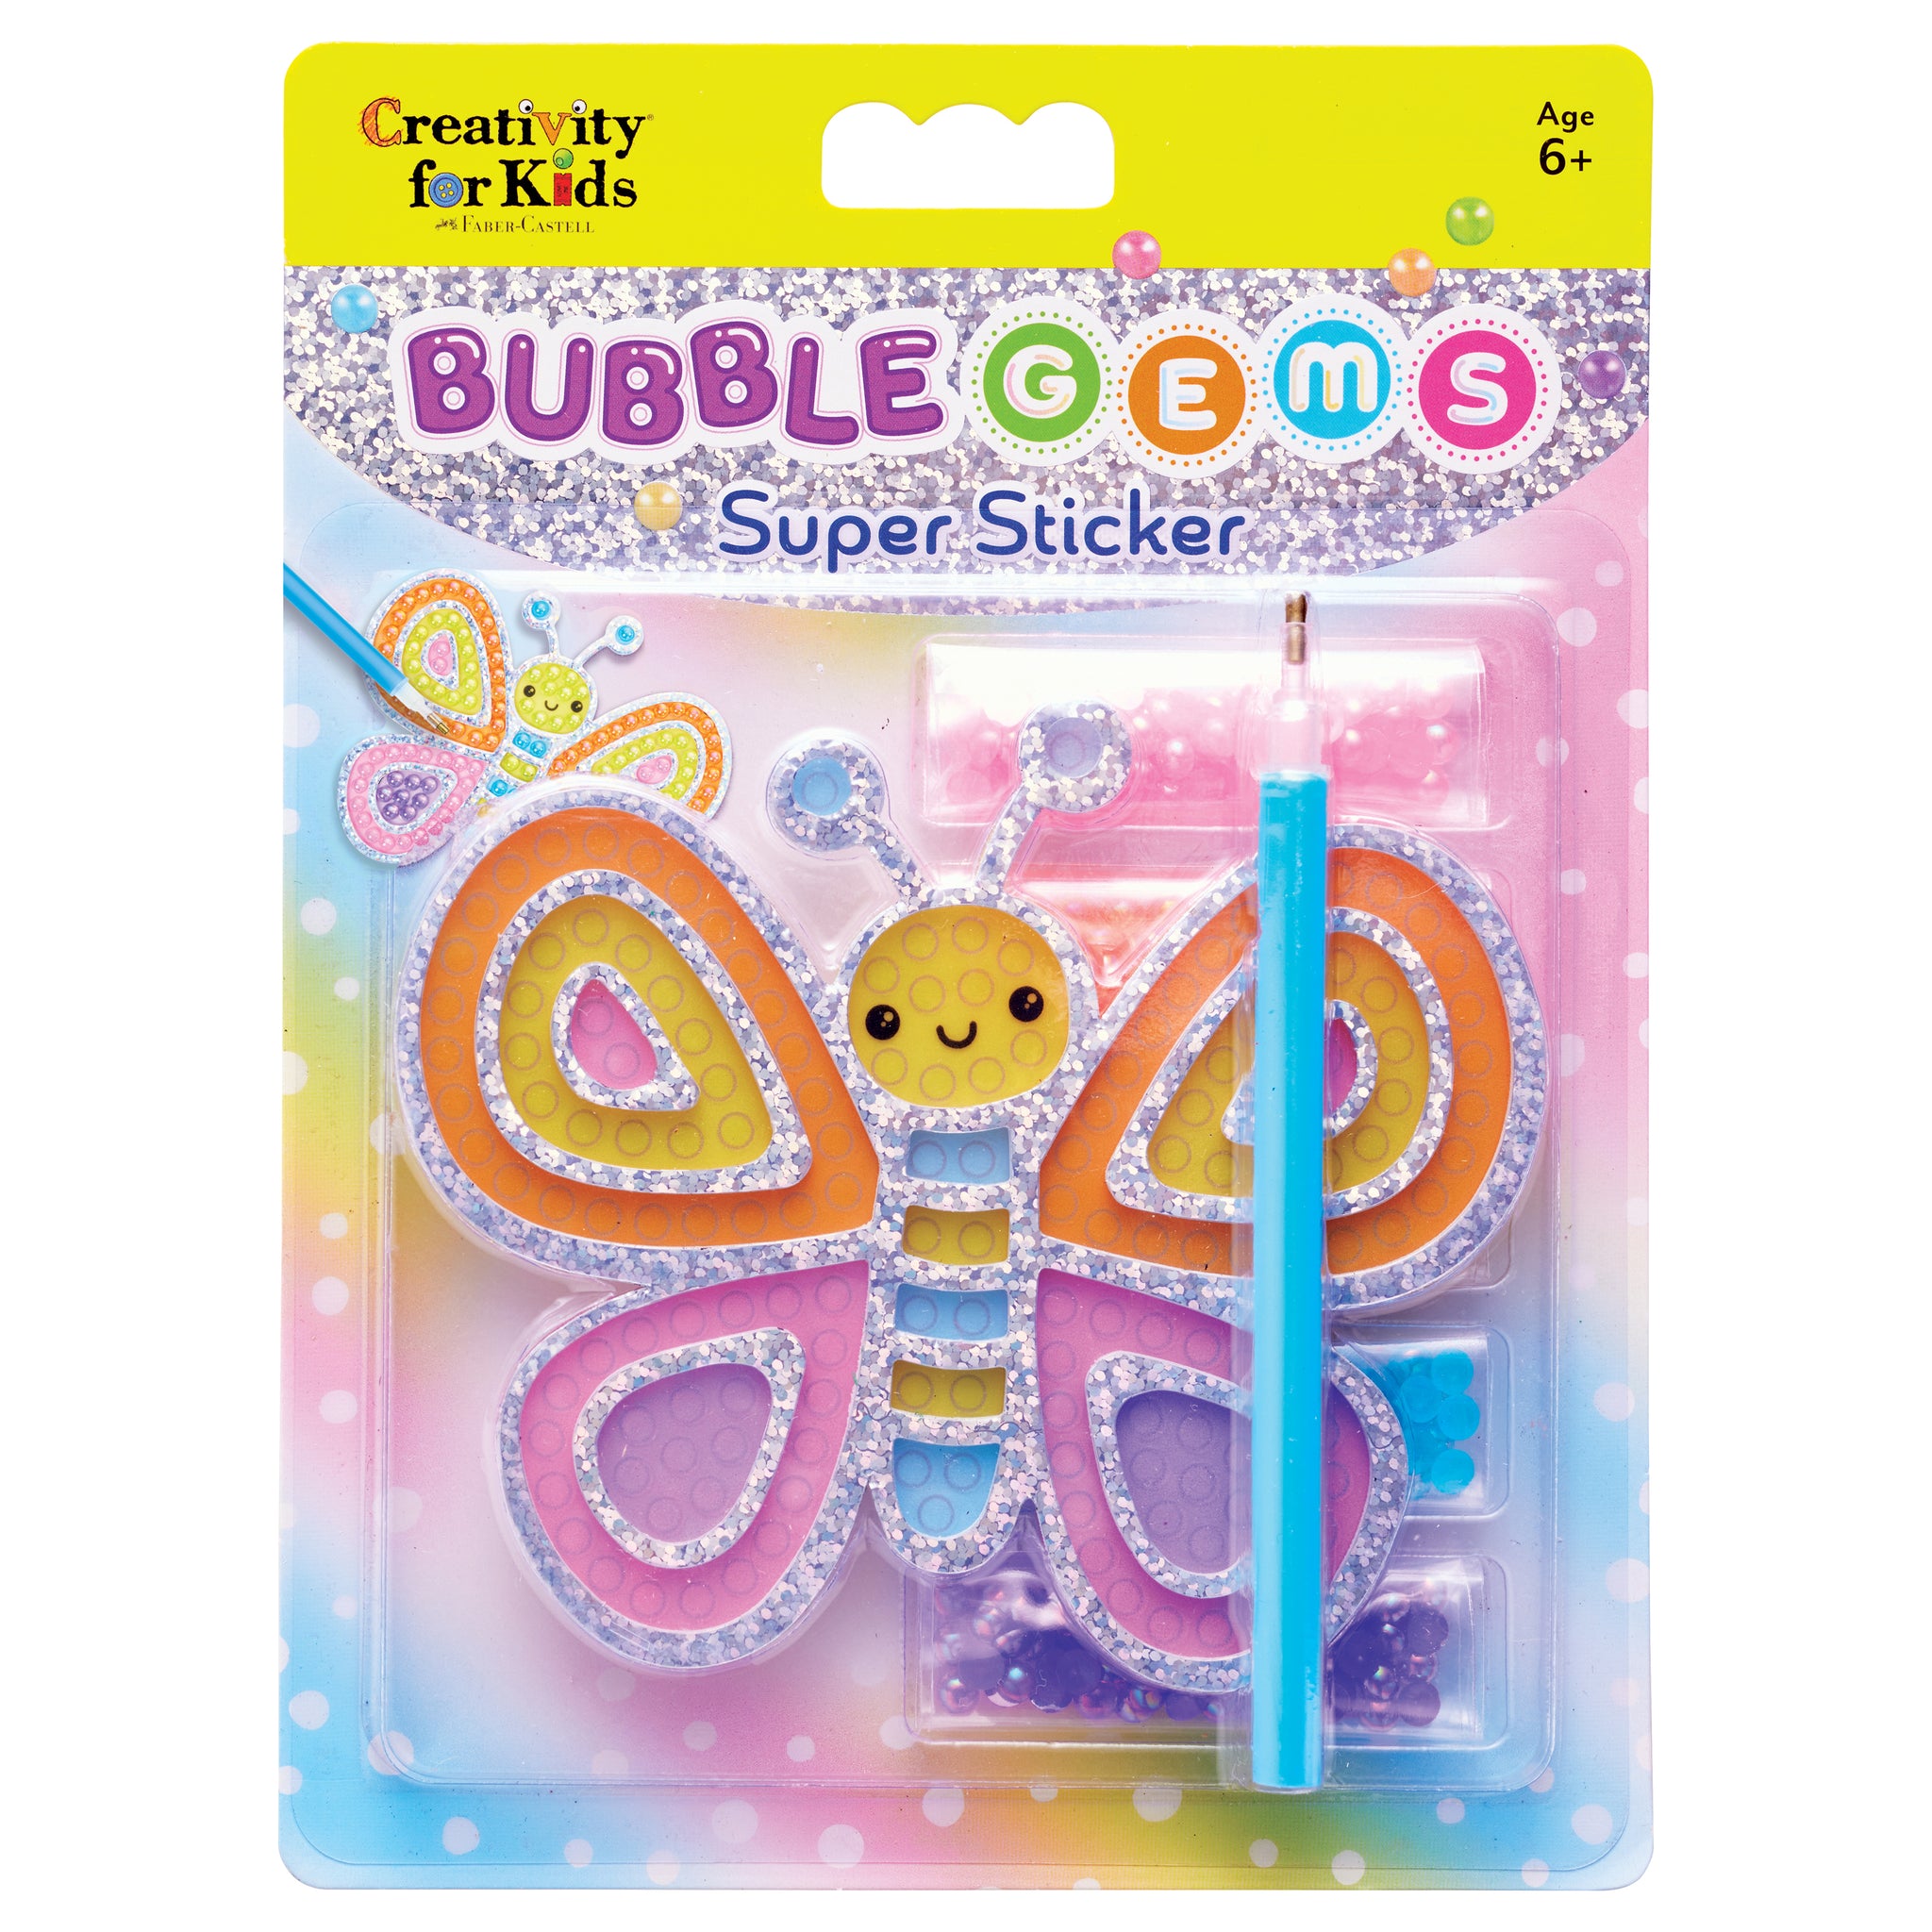 Bubble Gems Super Sticker